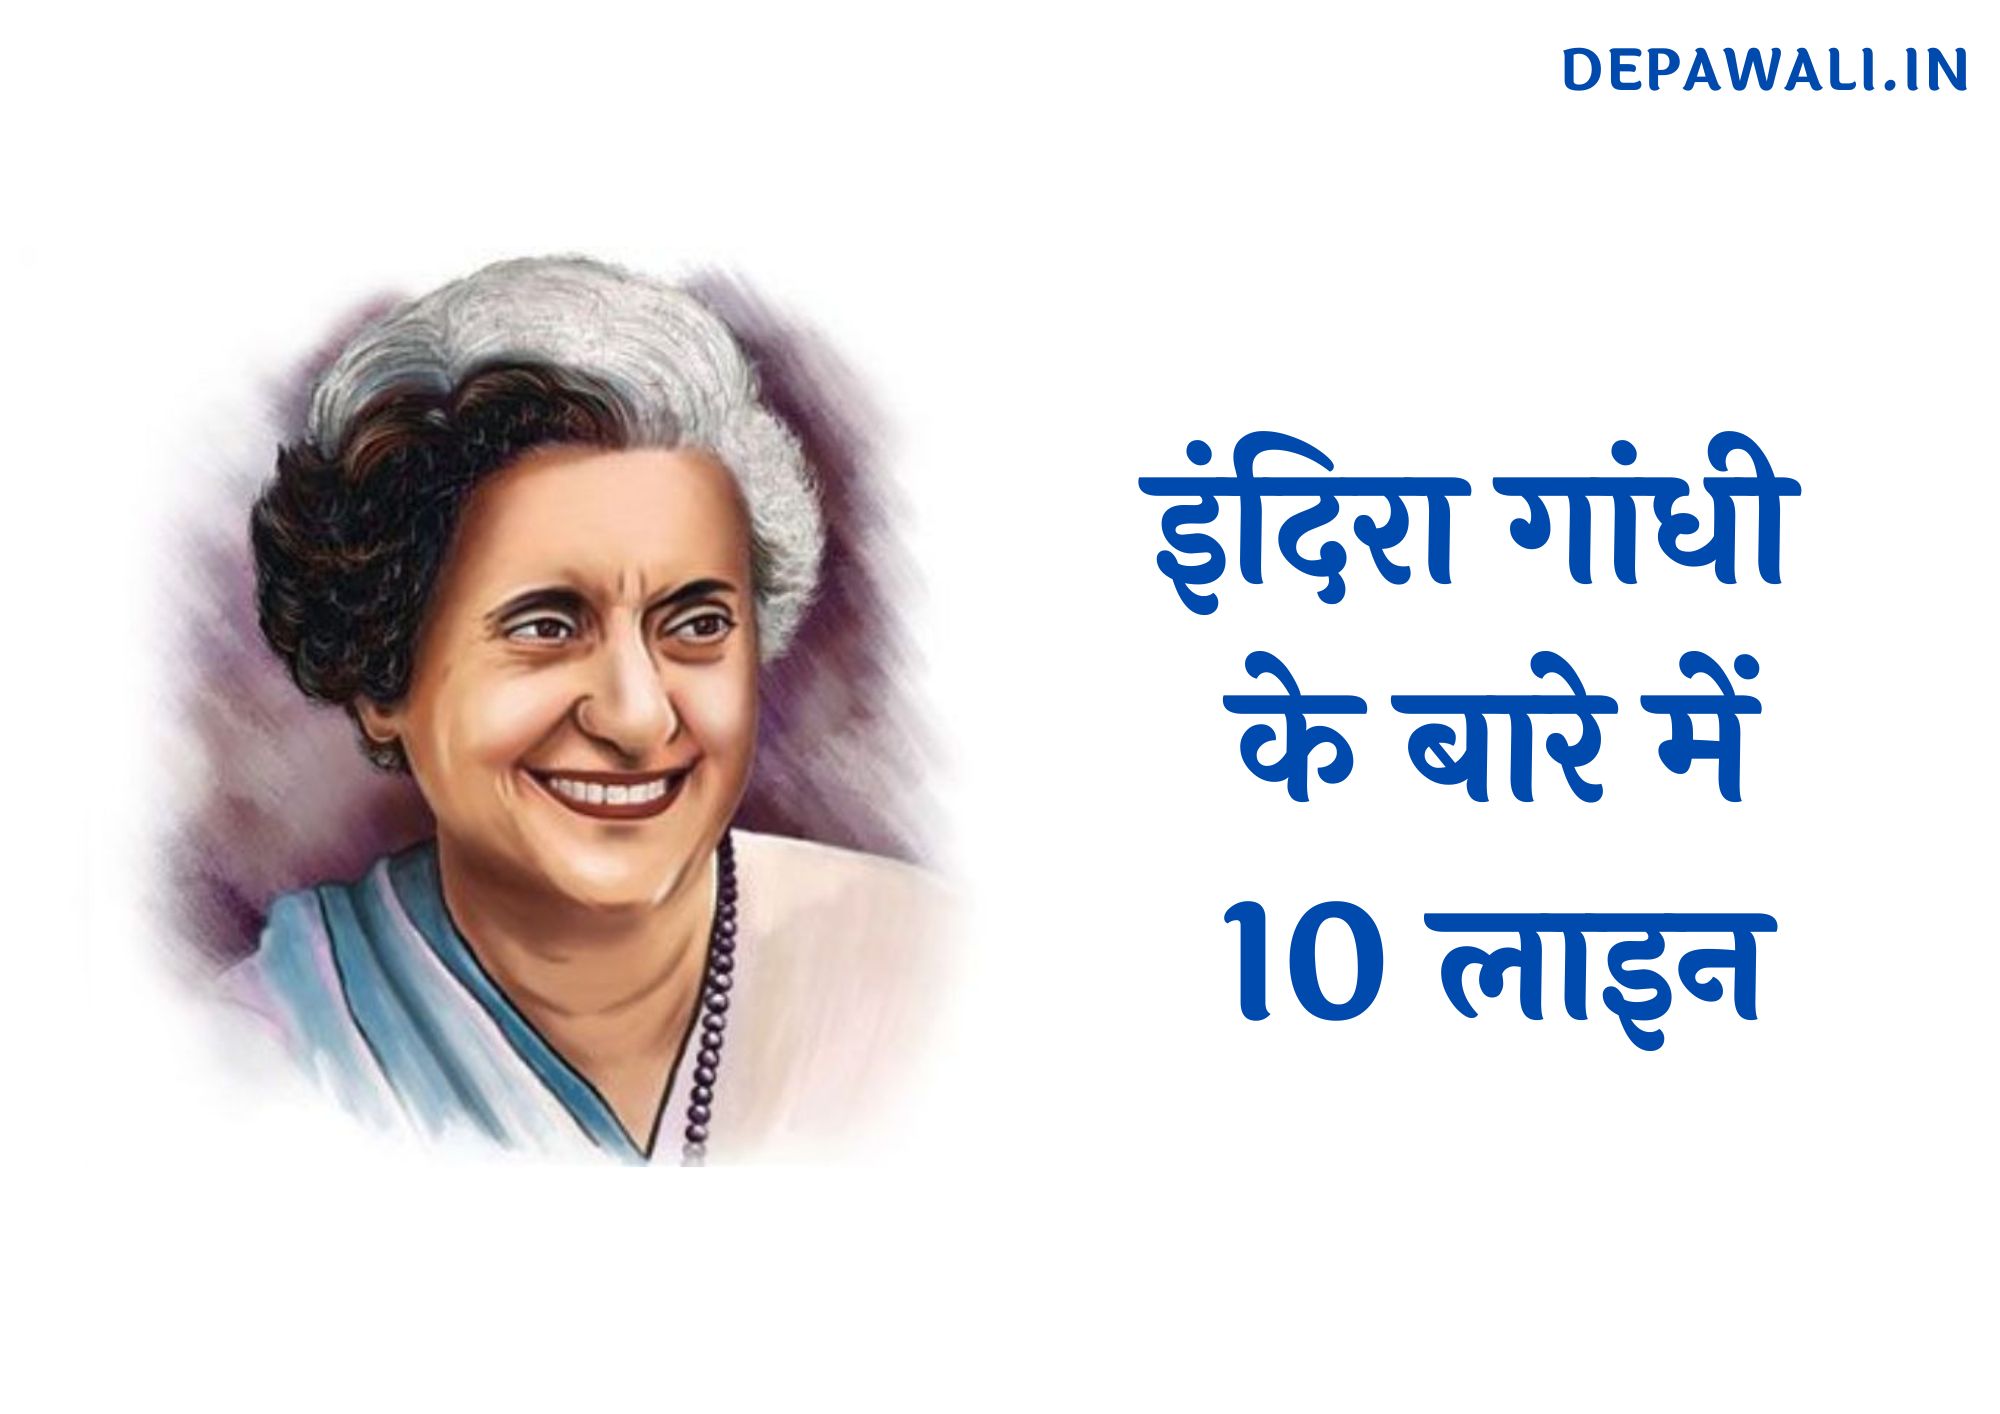 इंदिरा गांधी के बारे में 10 लाइन (10 Lines On Indira Gandhi In Hindi) - Few Lines About Indira Gandhi In Hindi